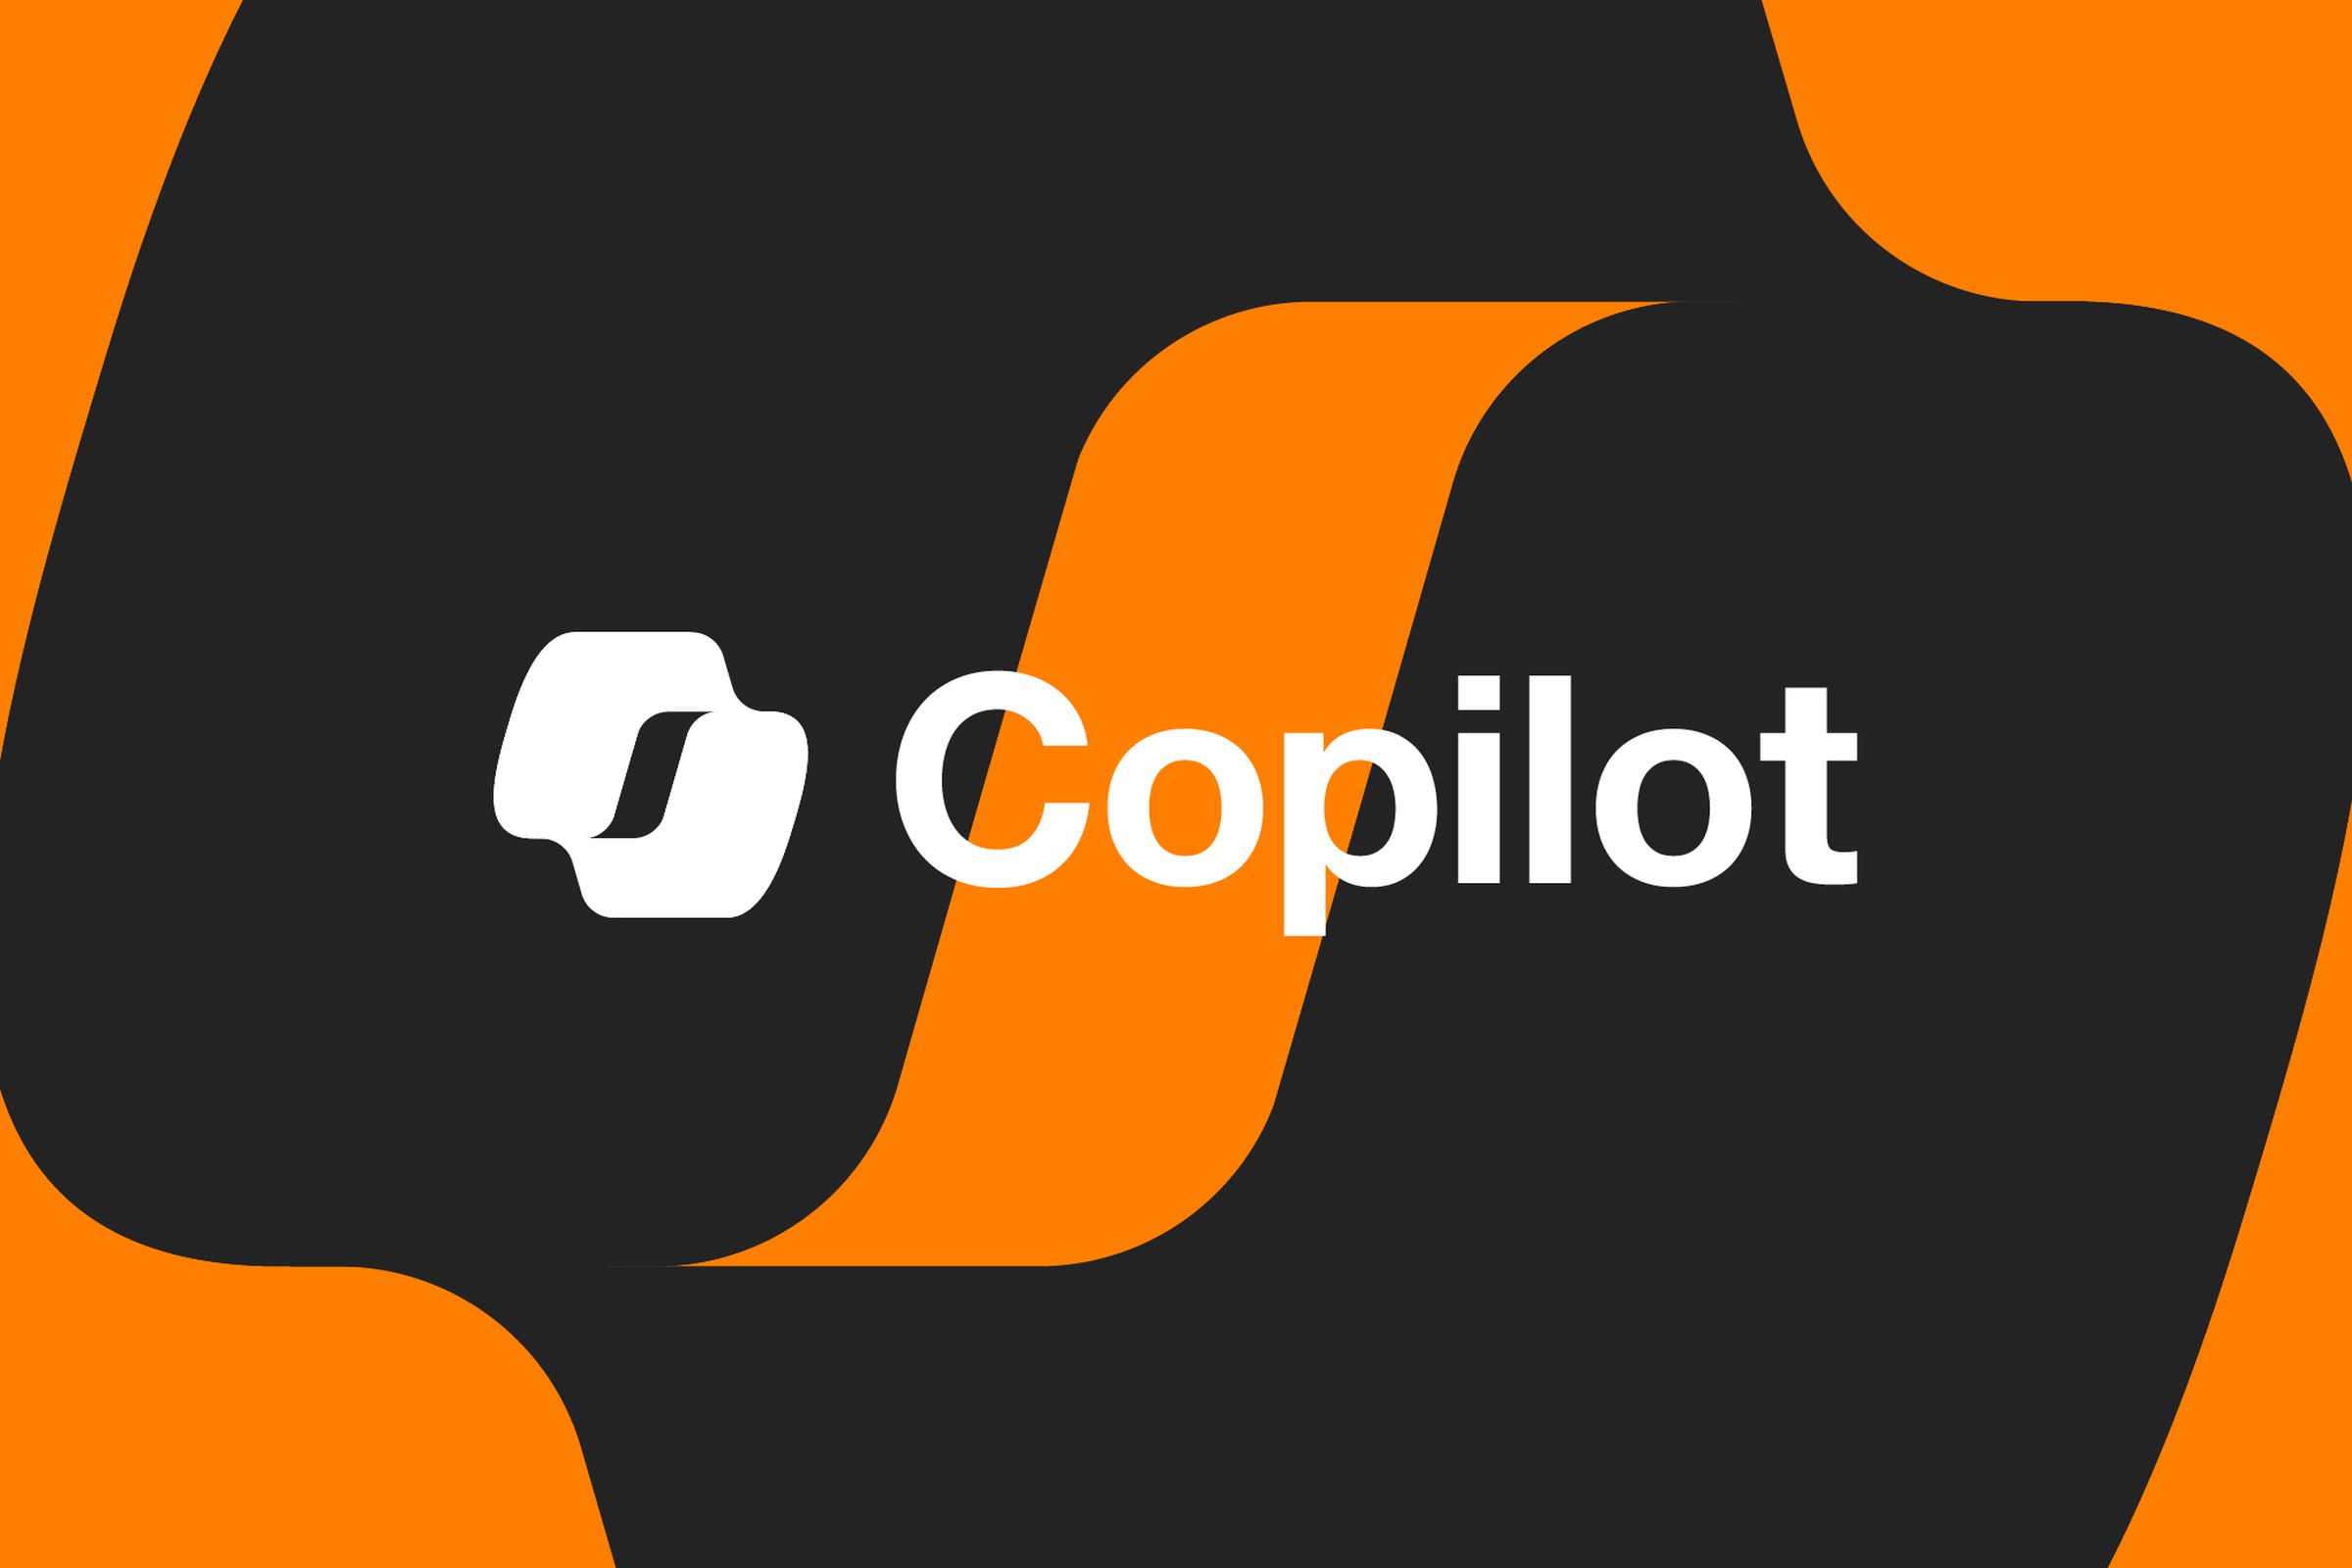 Vector collage of the Microsoft Copilot logo.